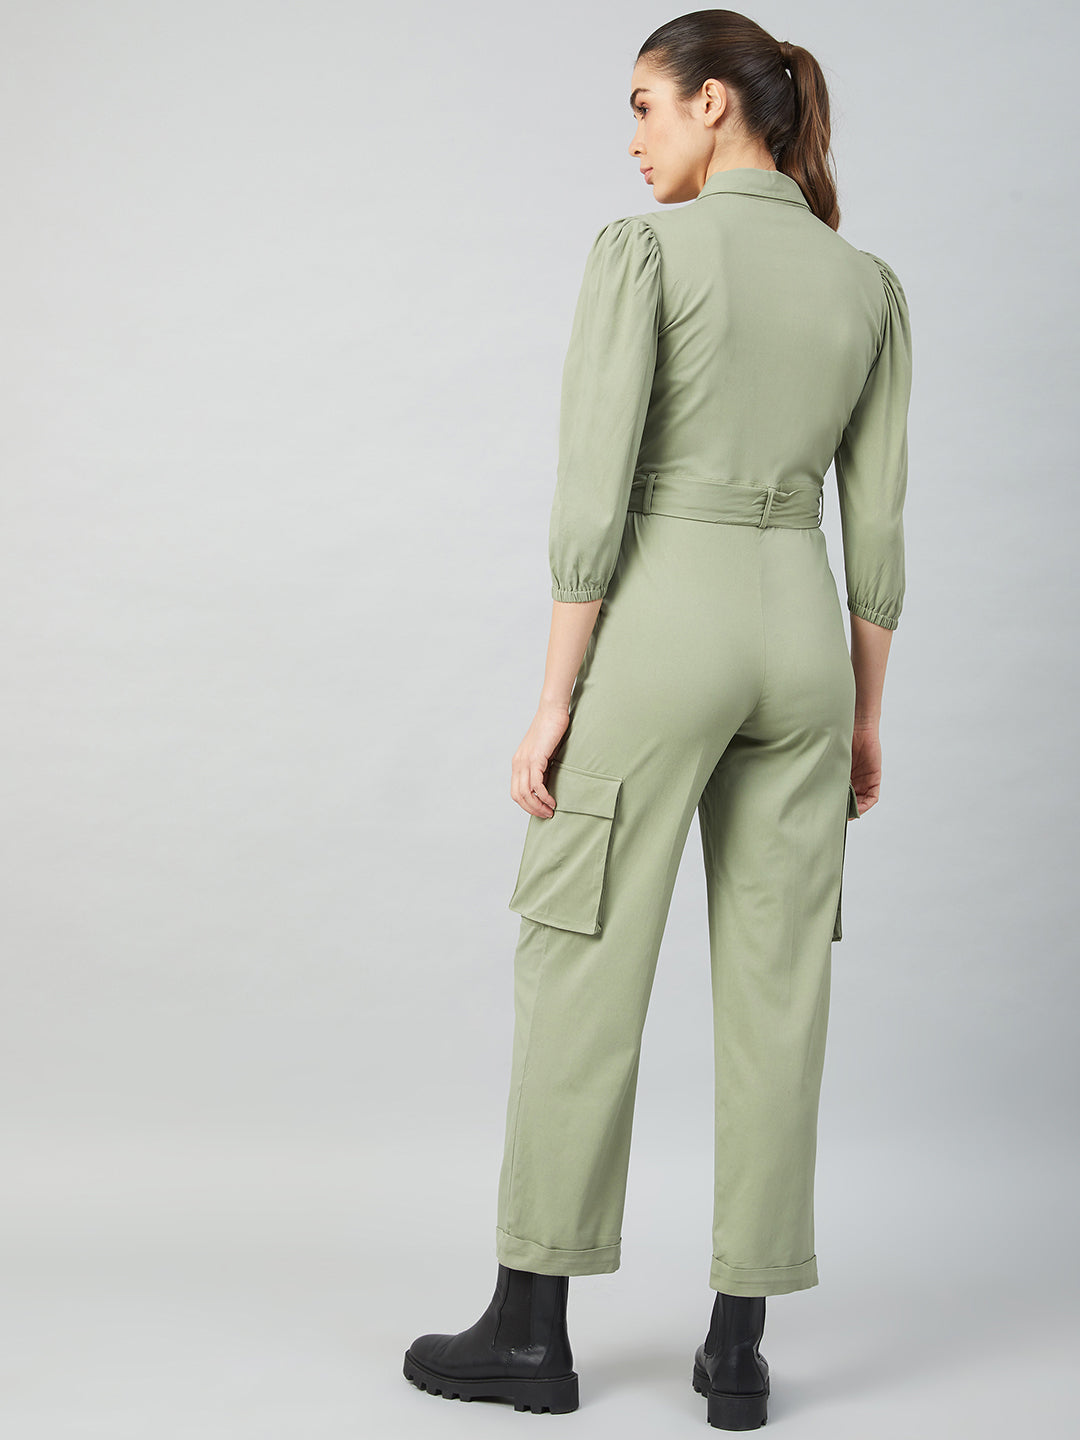 Athena Women Olive Green Solid Jumpsuit - Athena Lifestyle